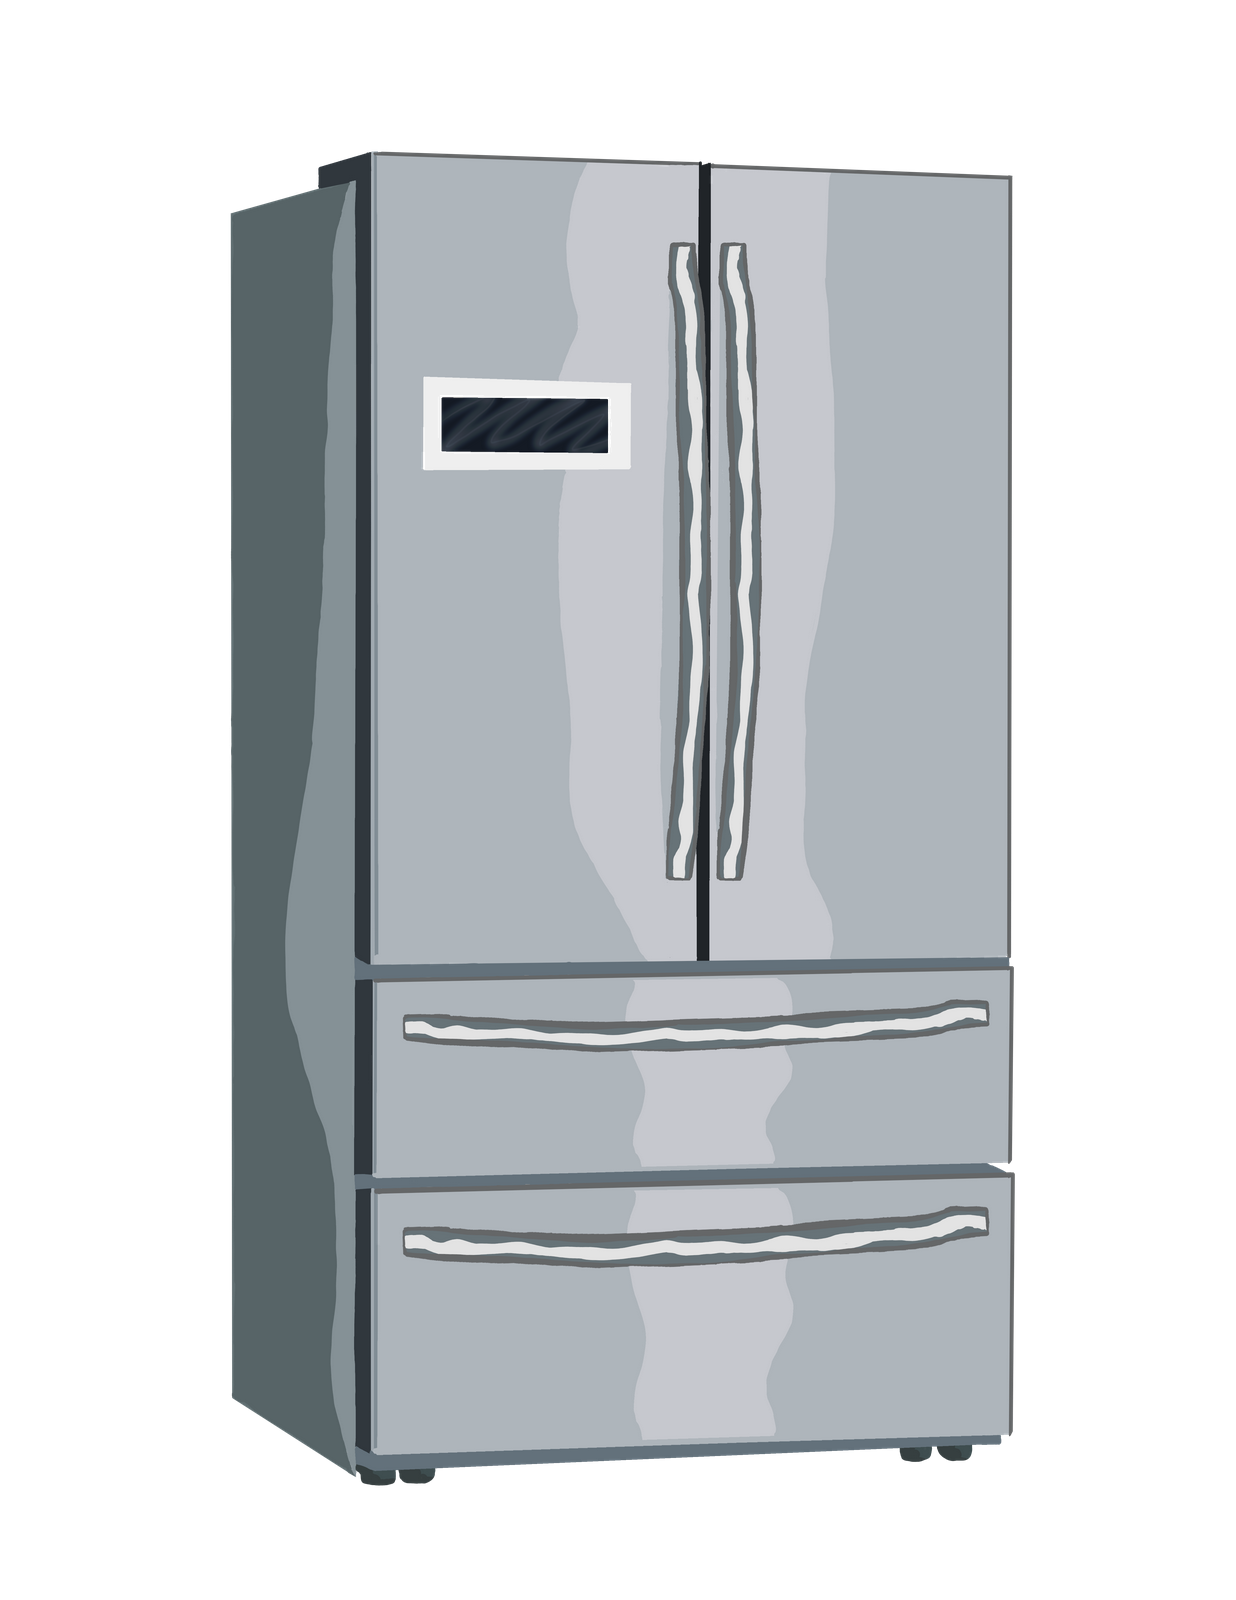 Whirlpool Refrigerator Repair In Montreal